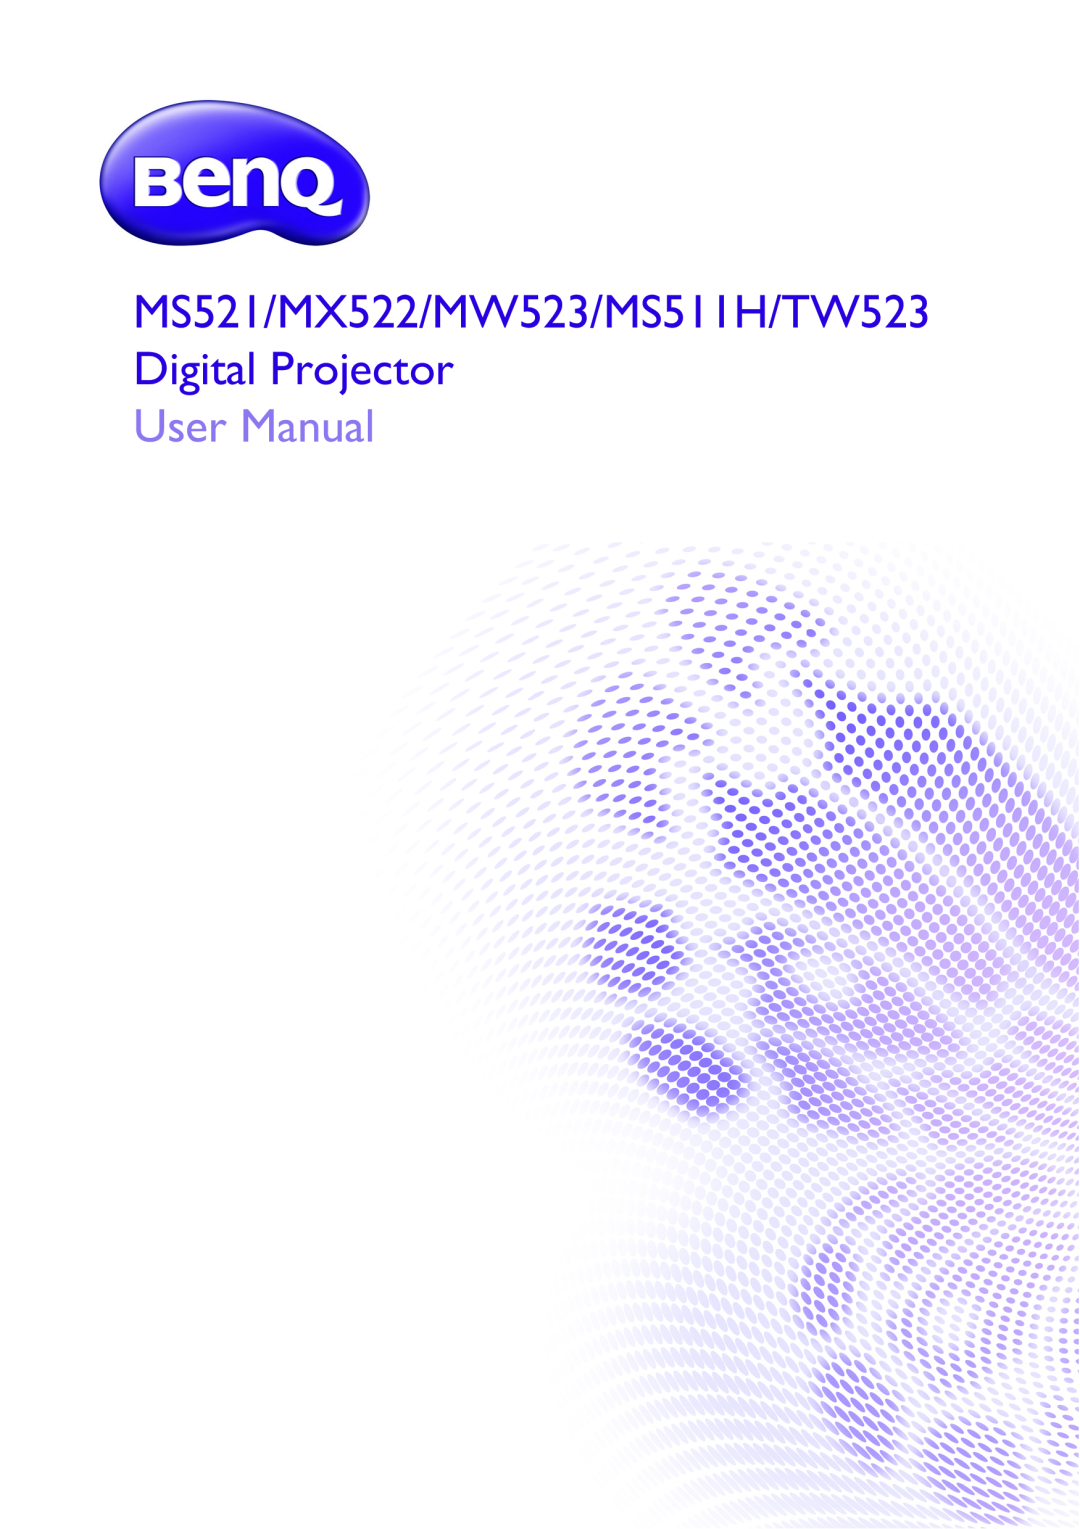 BenQ user manual MS521/MX522/MW523/MS511H/TW523 Digital Projector, User Man ual 